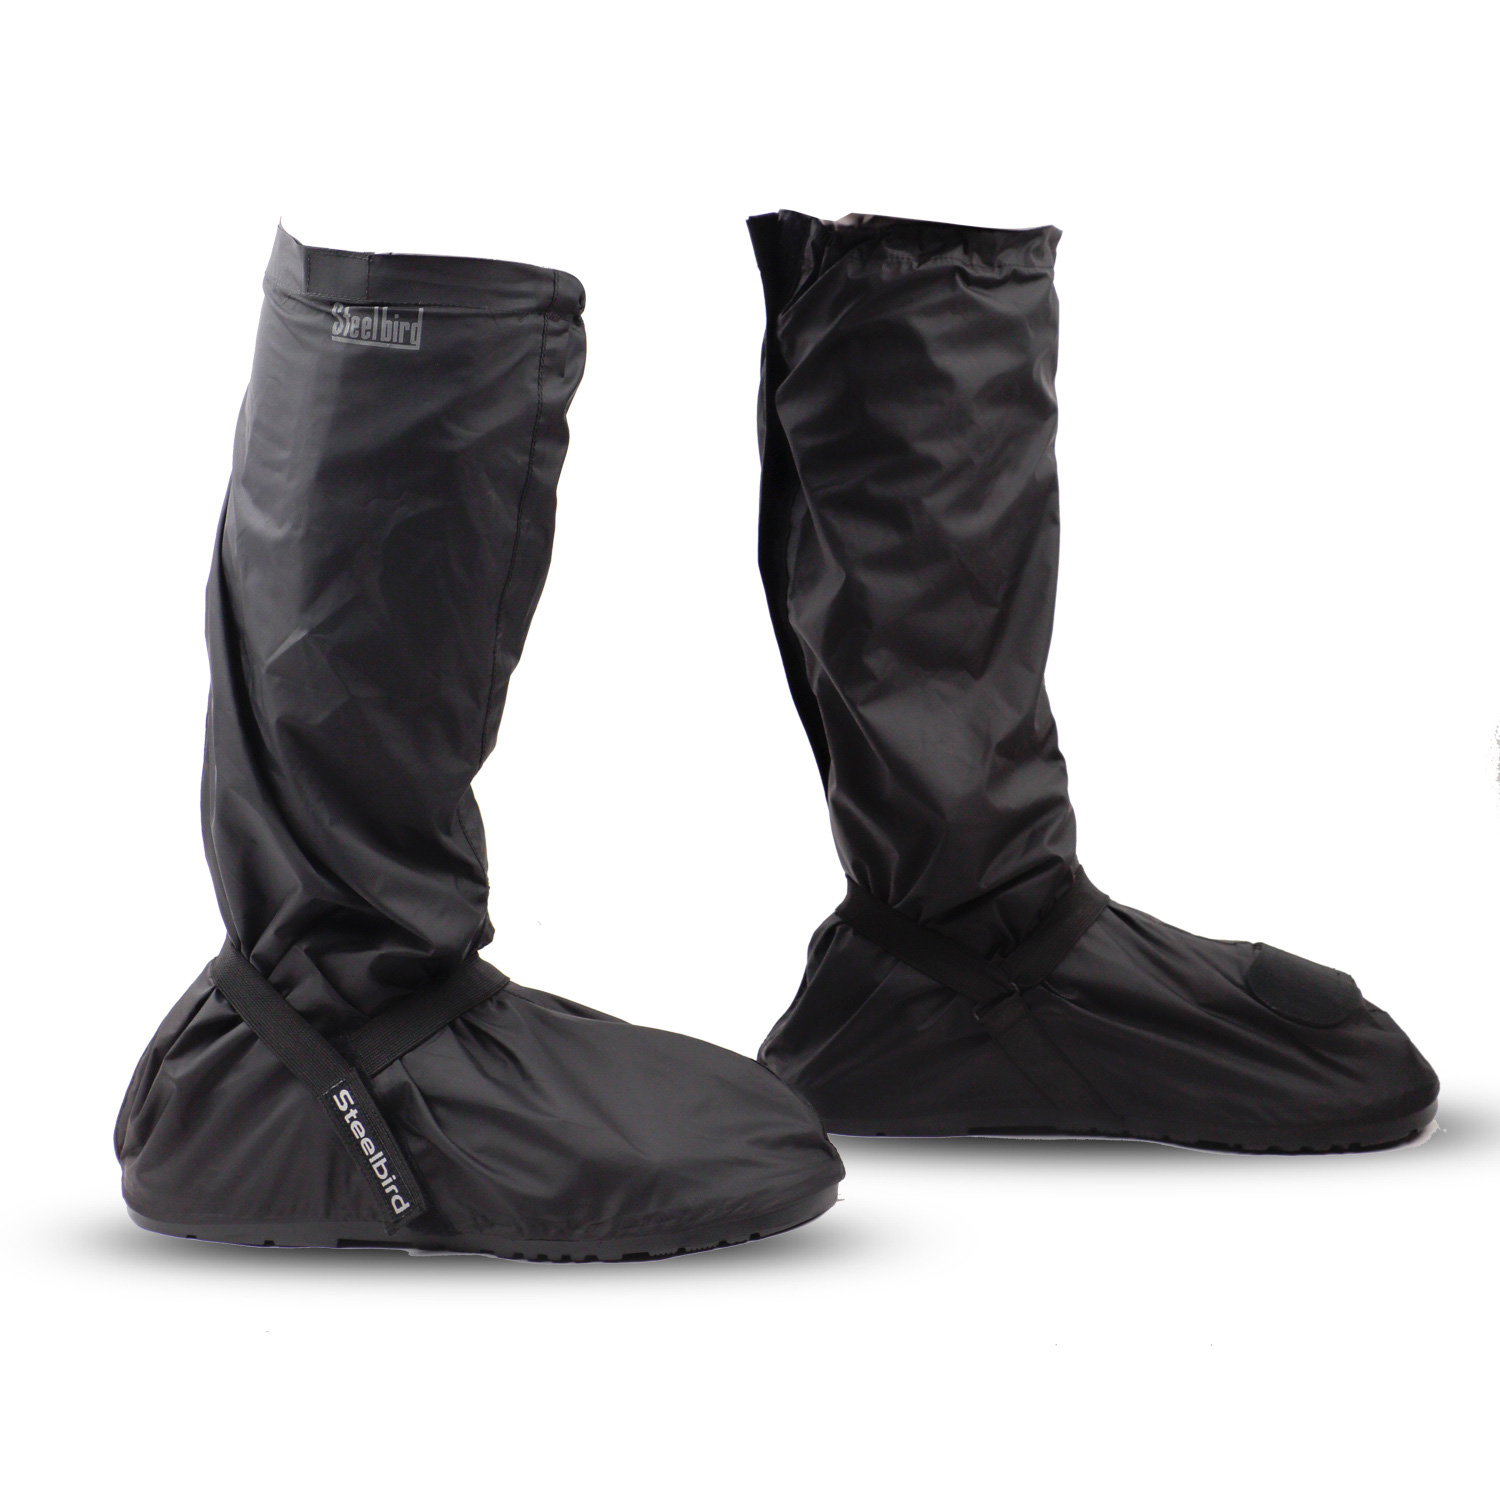 Steelbird Shoe Cover- Black